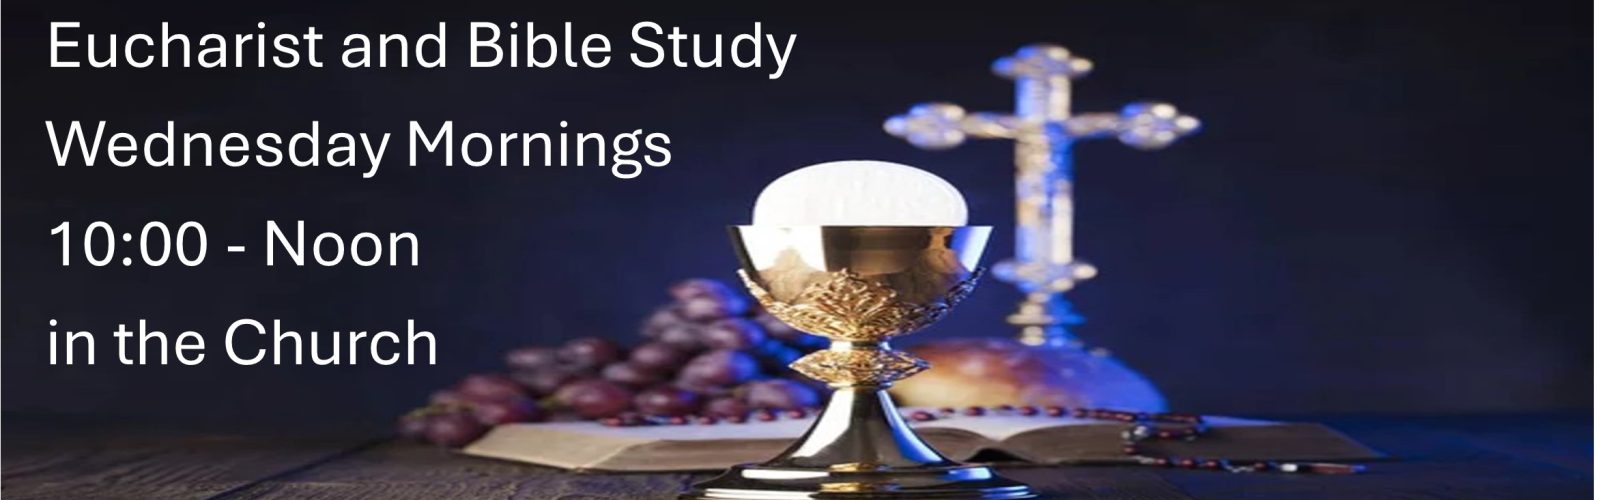 Eucharist and Bible Study